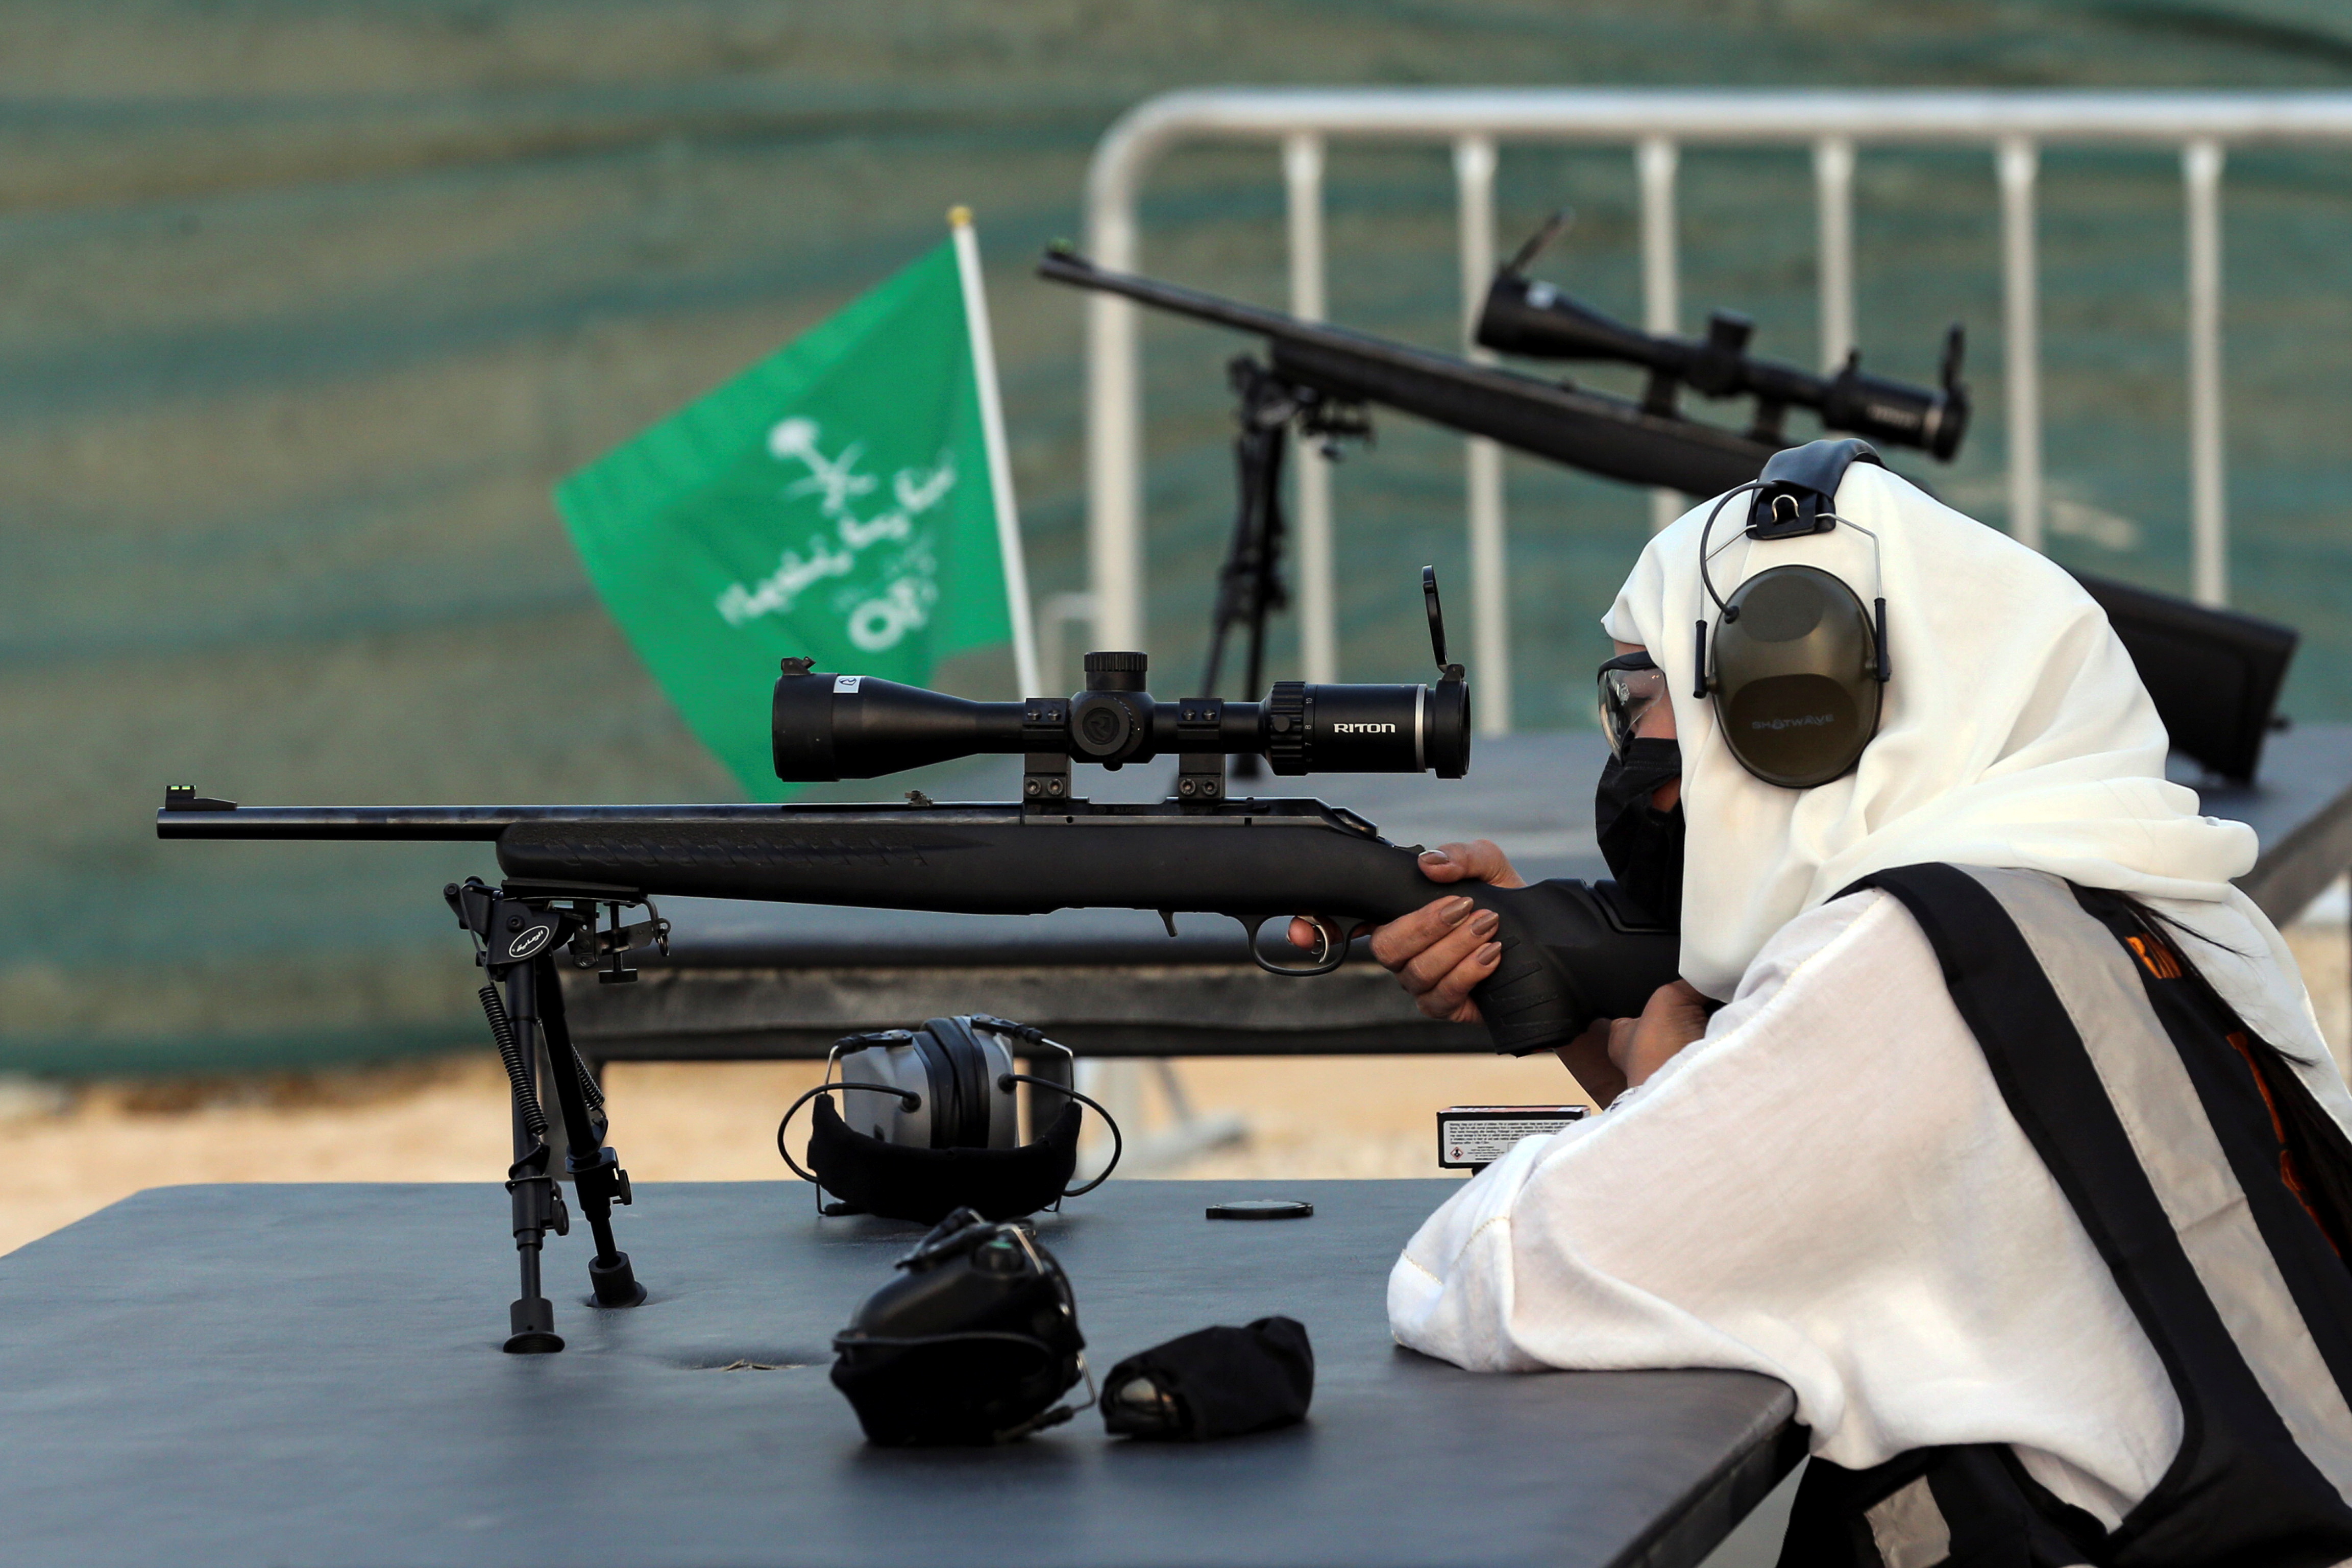 Saudi female firearm trainer, Mona Al Khurais, takes aim with her long-range rifle during her target practice at the Top-Gun shooting range in Riyadh, Saudi Arabia, October 28, 2021. REUTERS/Ahmed Yosri